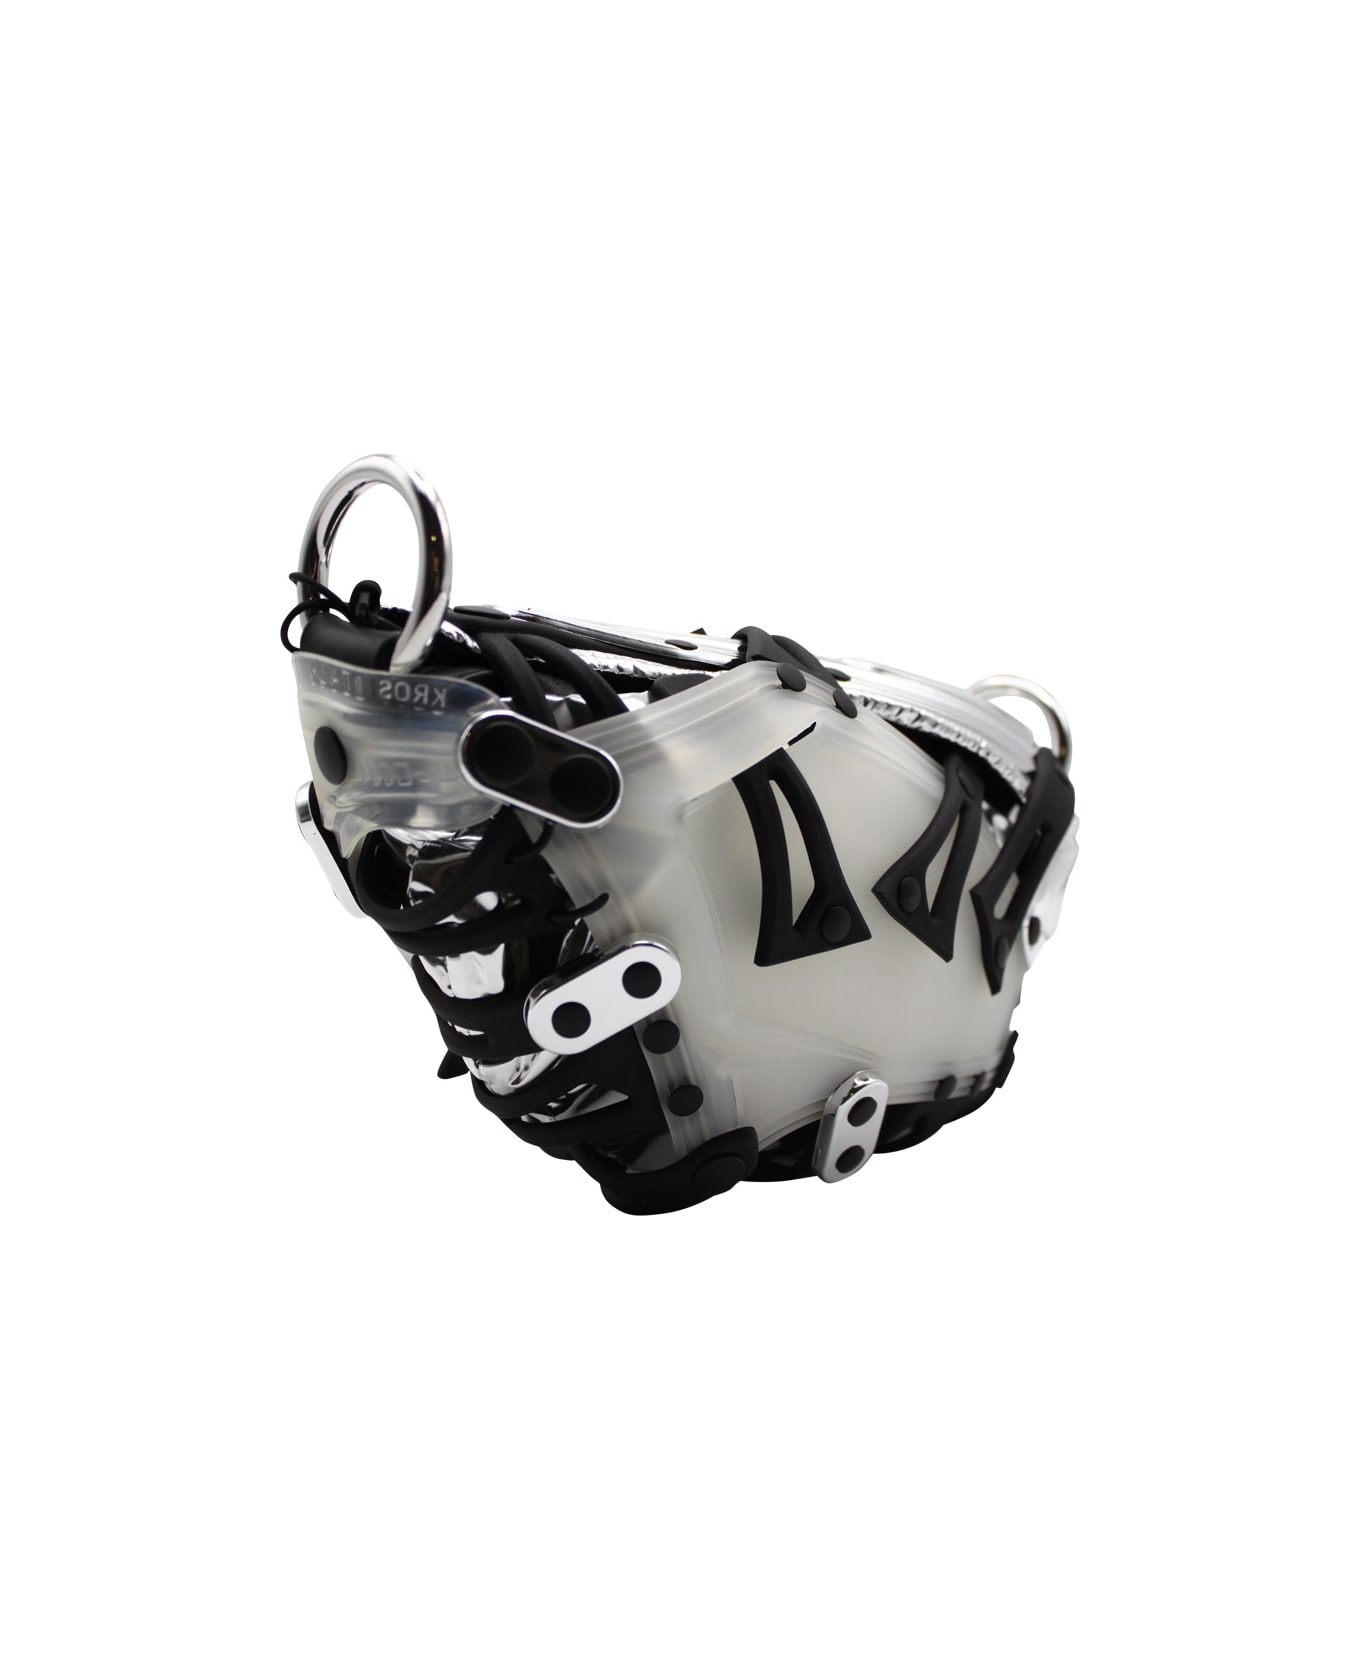 Innerraum Object I14 Smartphone Bag - Crystal Water  Silver Black